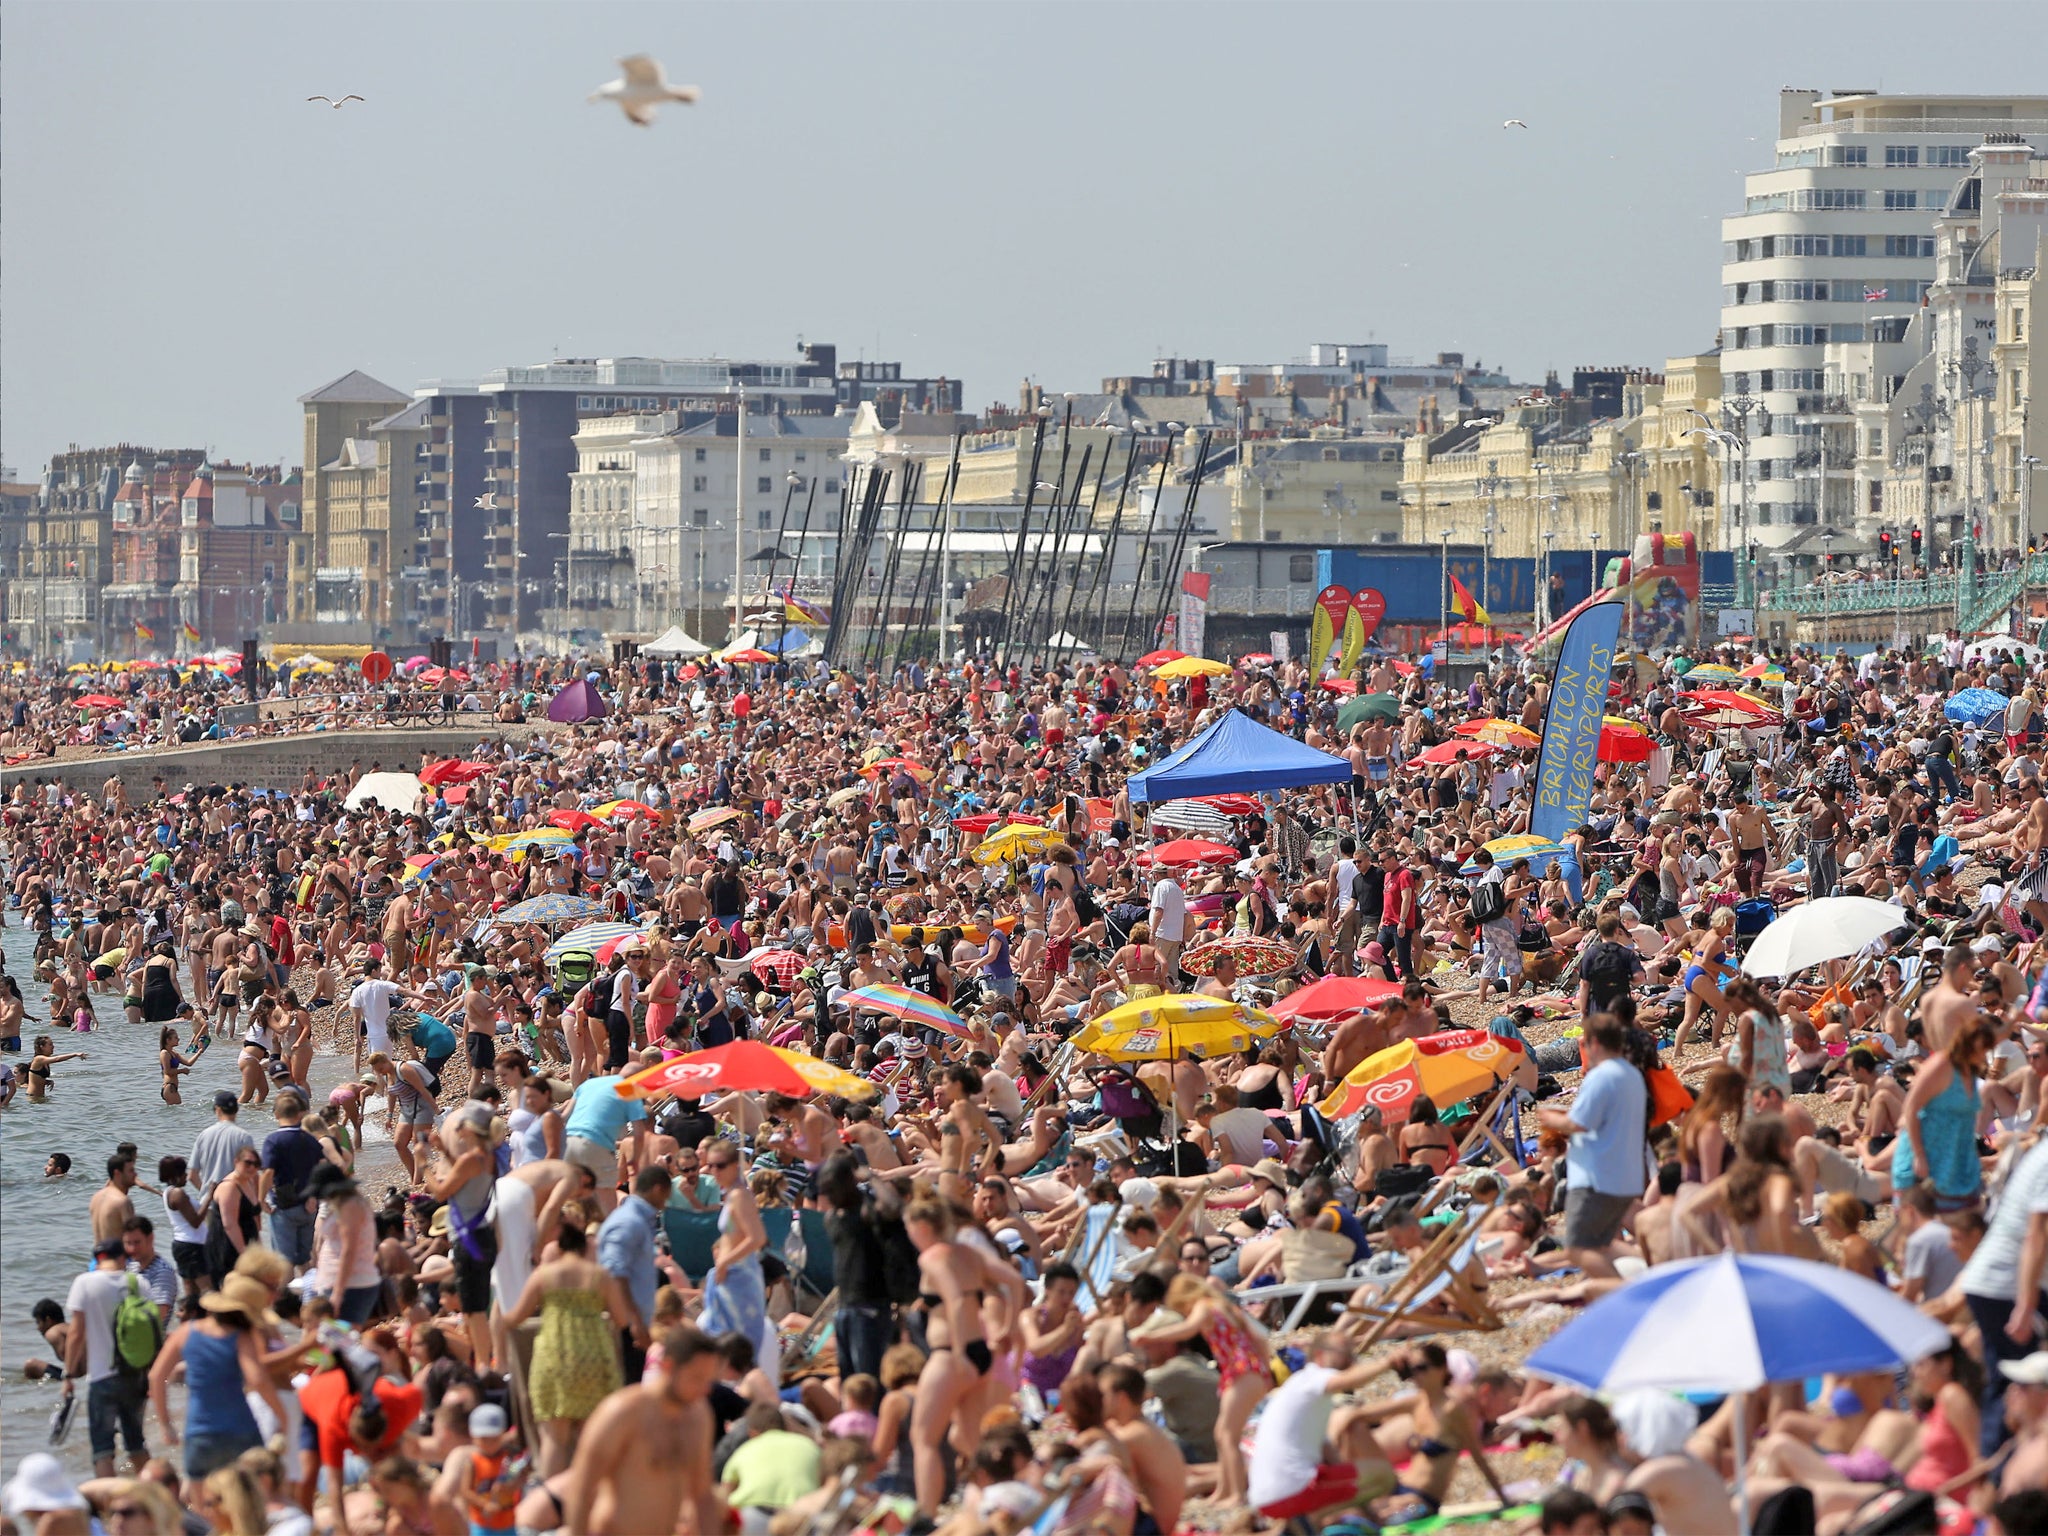 A packed Brighton beach last weekend